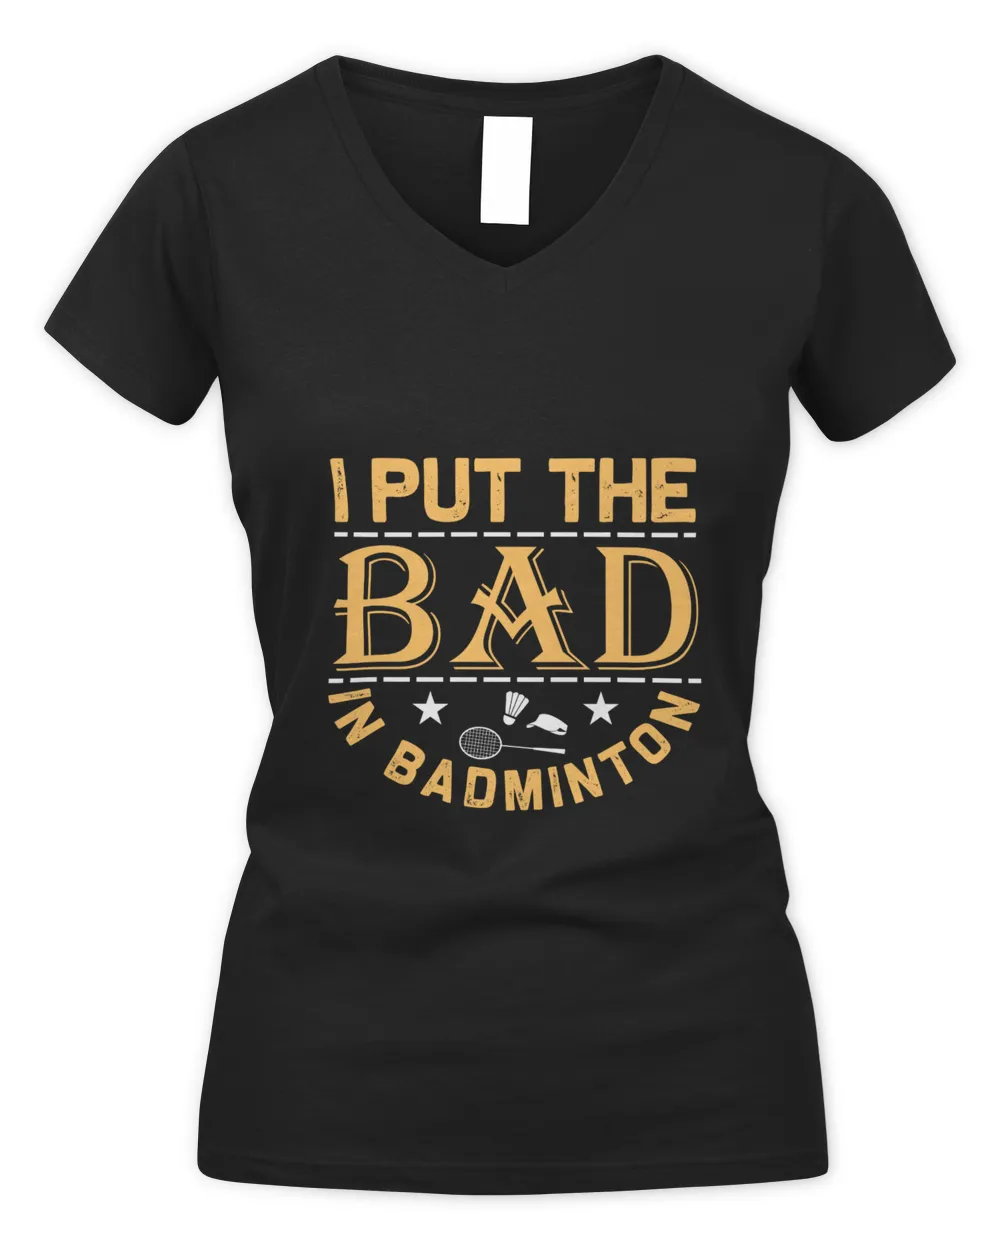 I Shirt, Badminton Shirt,Badminton T-shirt,Funny Badminton Shirt, Badminton Gift,Sport Shirt